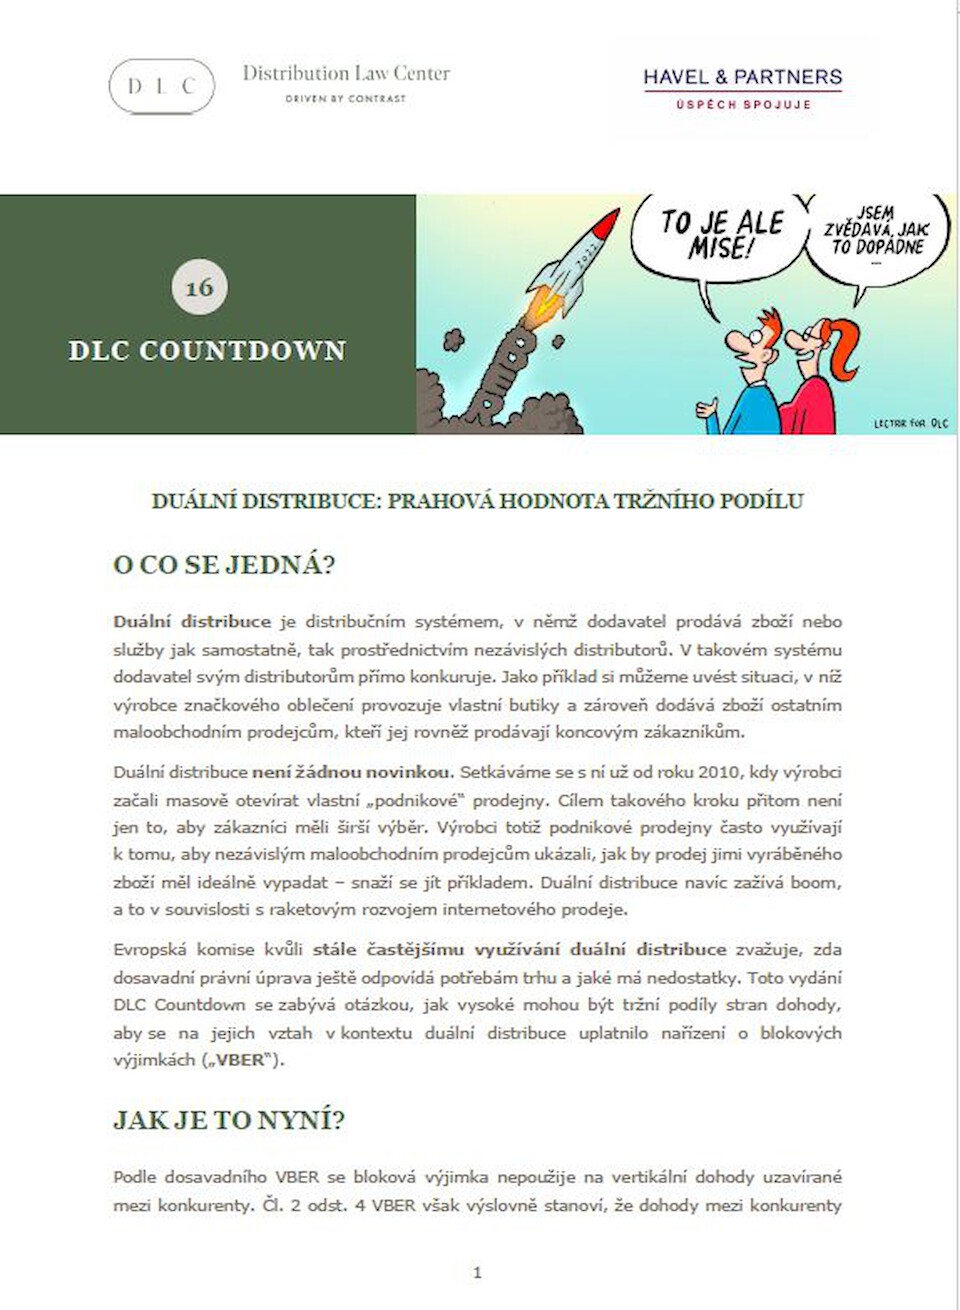 Distribution Law Center Countdown XVI - Dual distribution (Market share threshold)